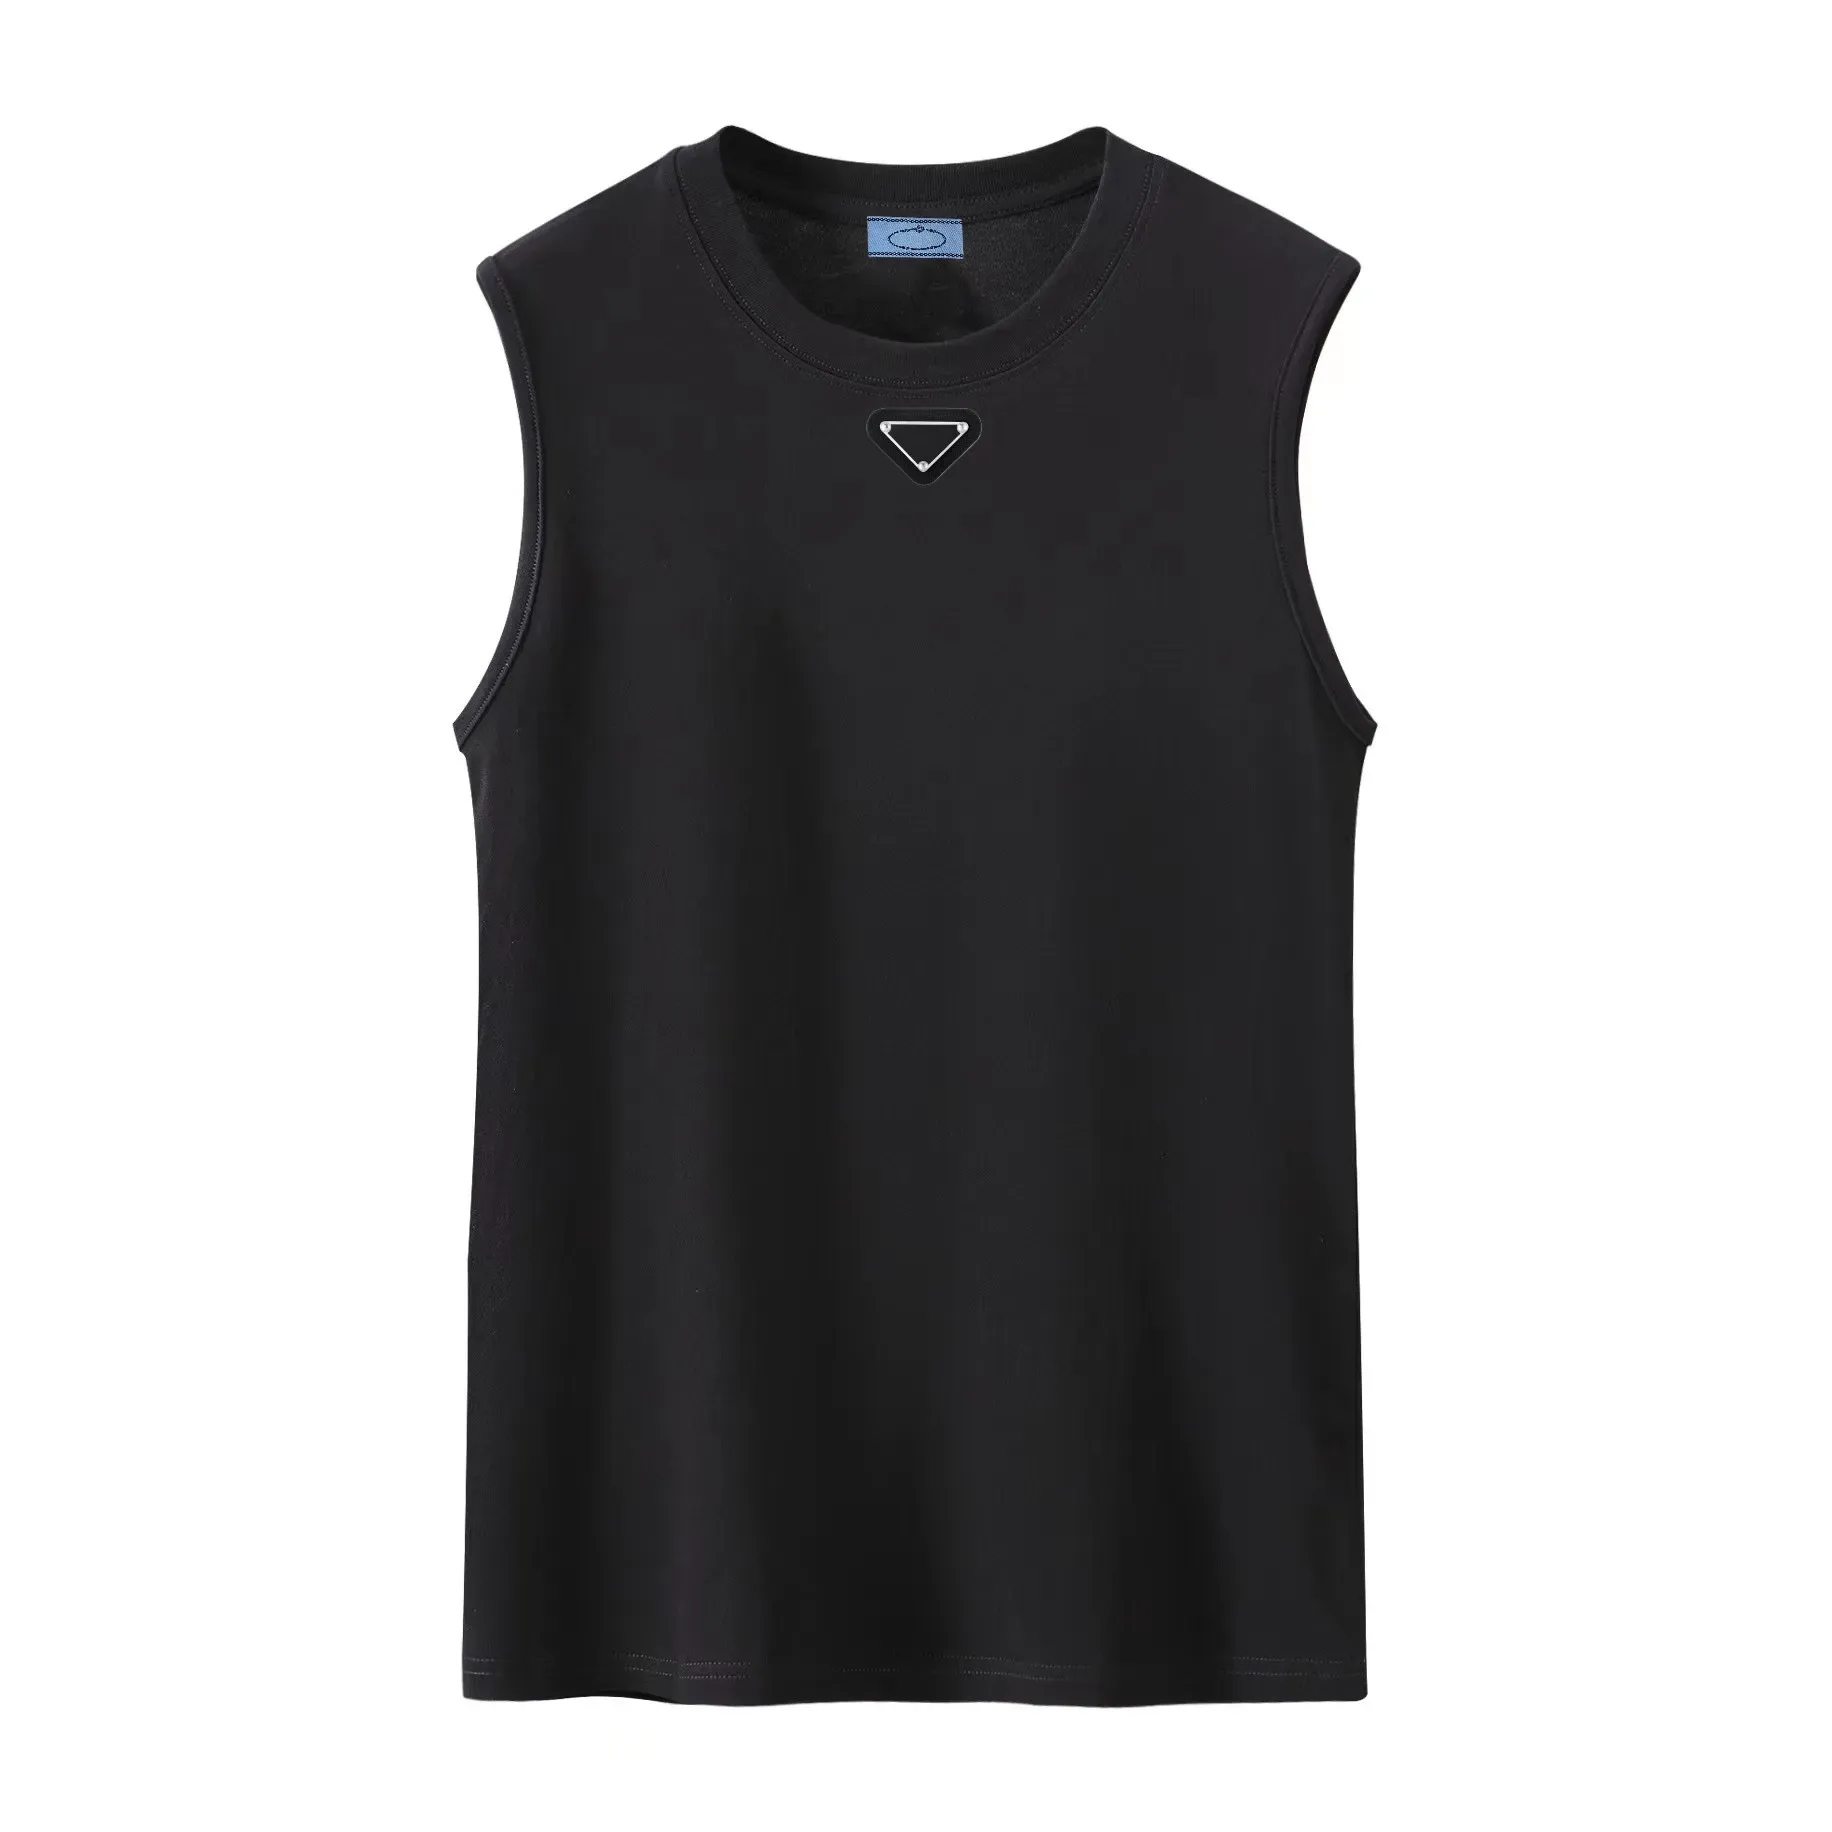 Designer T-shirt Tees Mens Tank Tops T Shirts Summer Slim Fit Sports Breattable Sweat-Absorbing Black Underwear Bottom Top Fashion Clothing